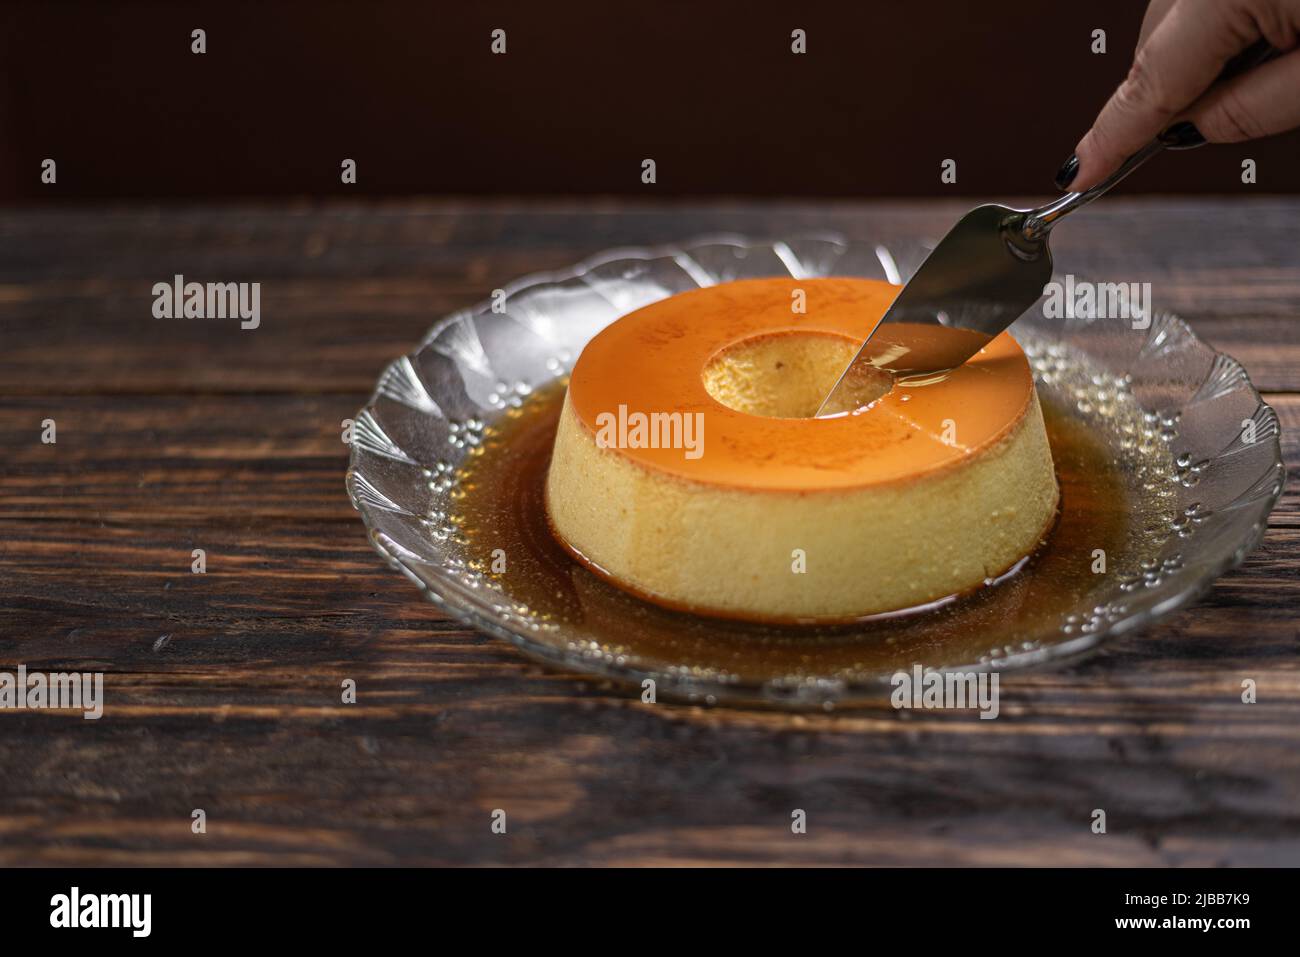 https://c8.alamy.com/comp/2JBB7K9/milk-pudding-or-pudim-de-leite-brazilian-dessert-homemade-caramel-custard-pudding-traditional-brazilian-flan-on-wooden-background-2JBB7K9.jpg